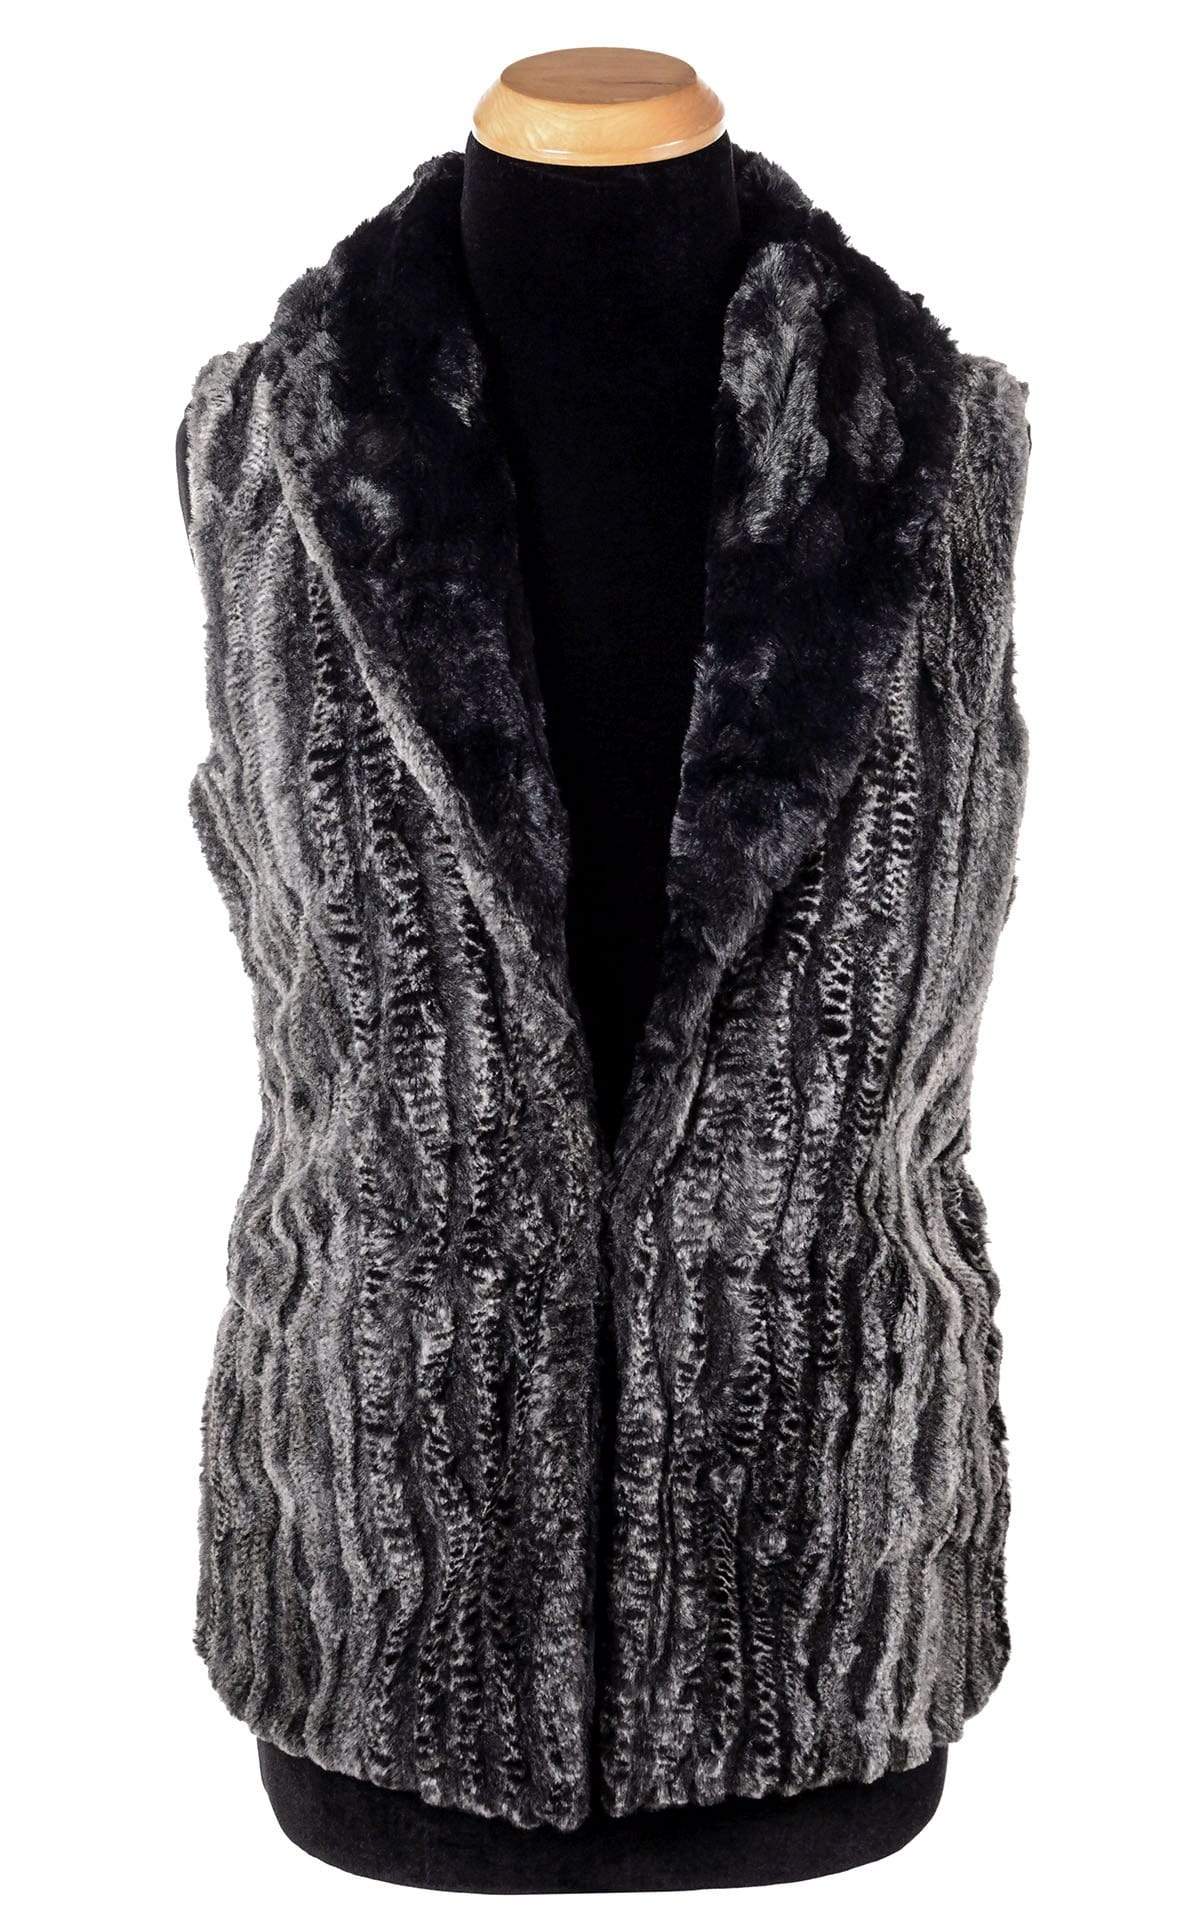 Shawl Collar Vest - Luxury Faux Fur in Rattle N Shake with Cuddly Fur in Black